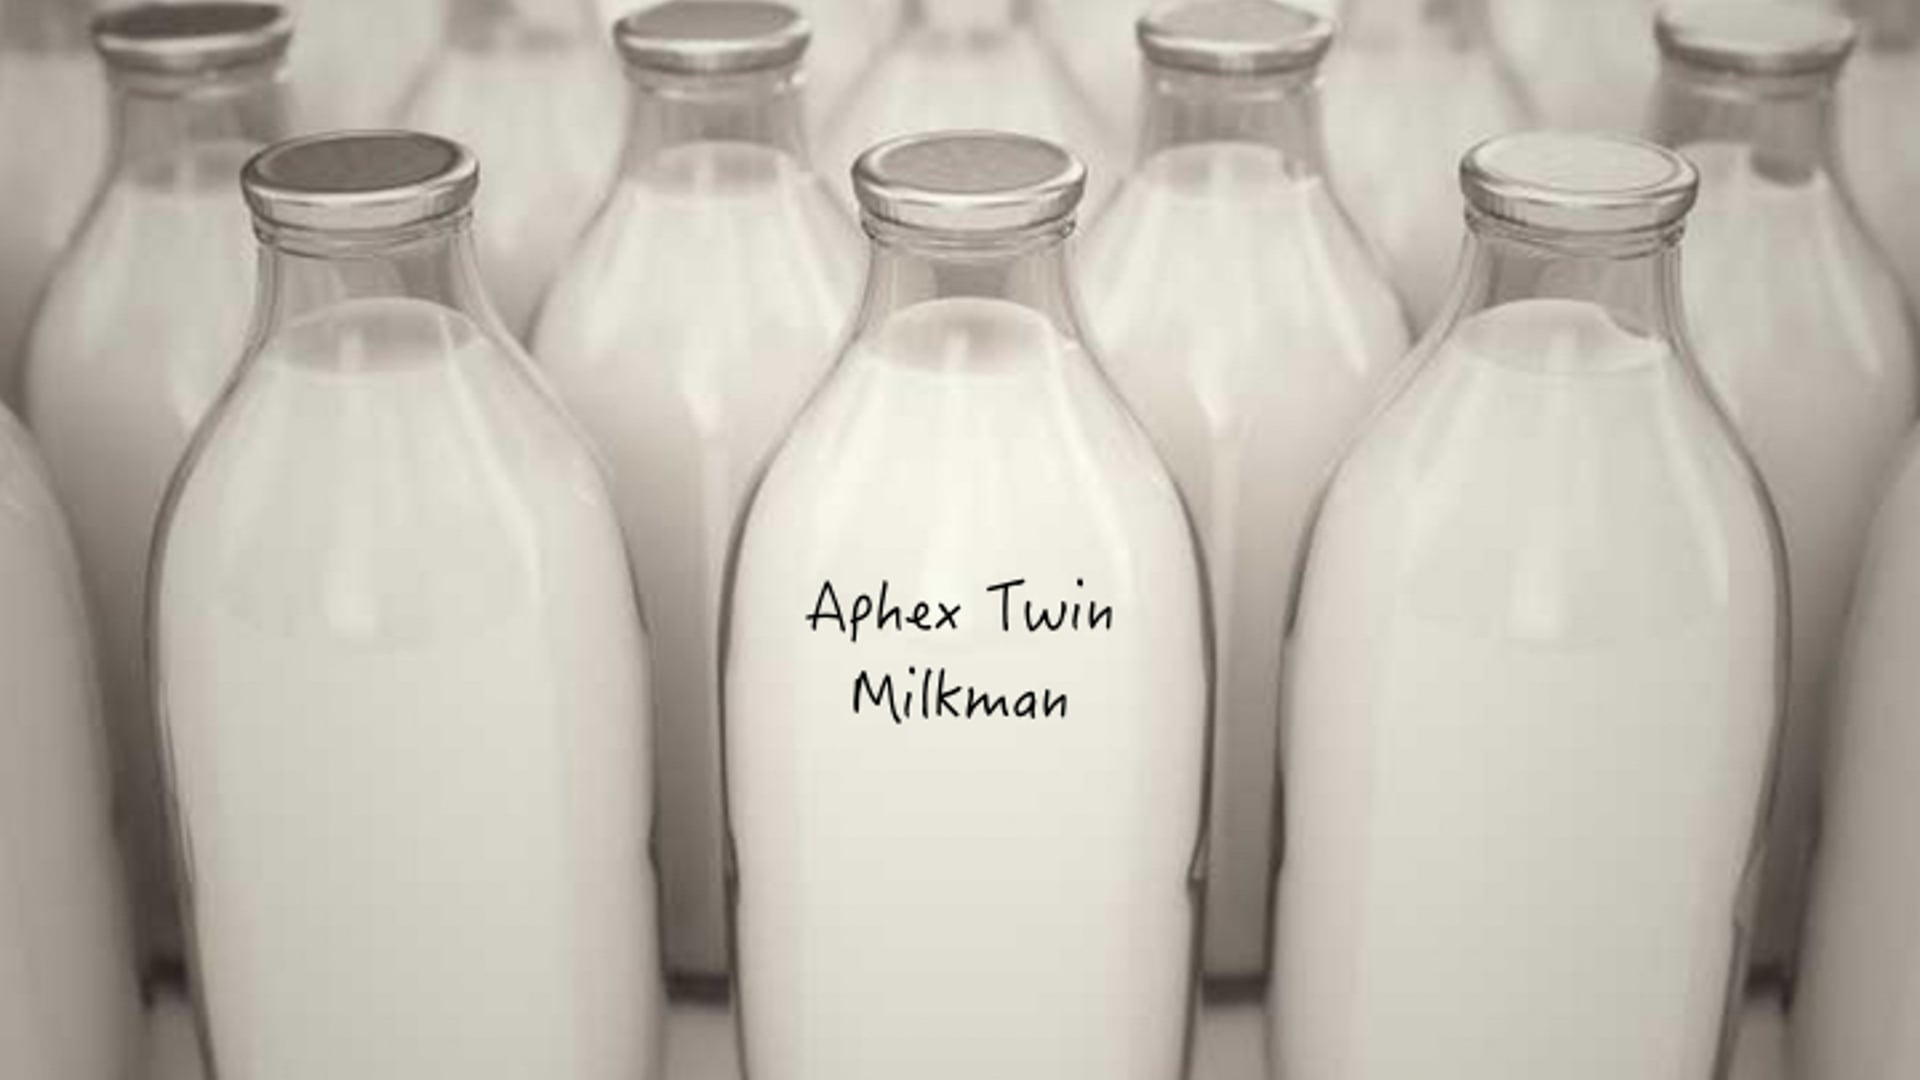 Aphex Twin "Milkman" - Music video